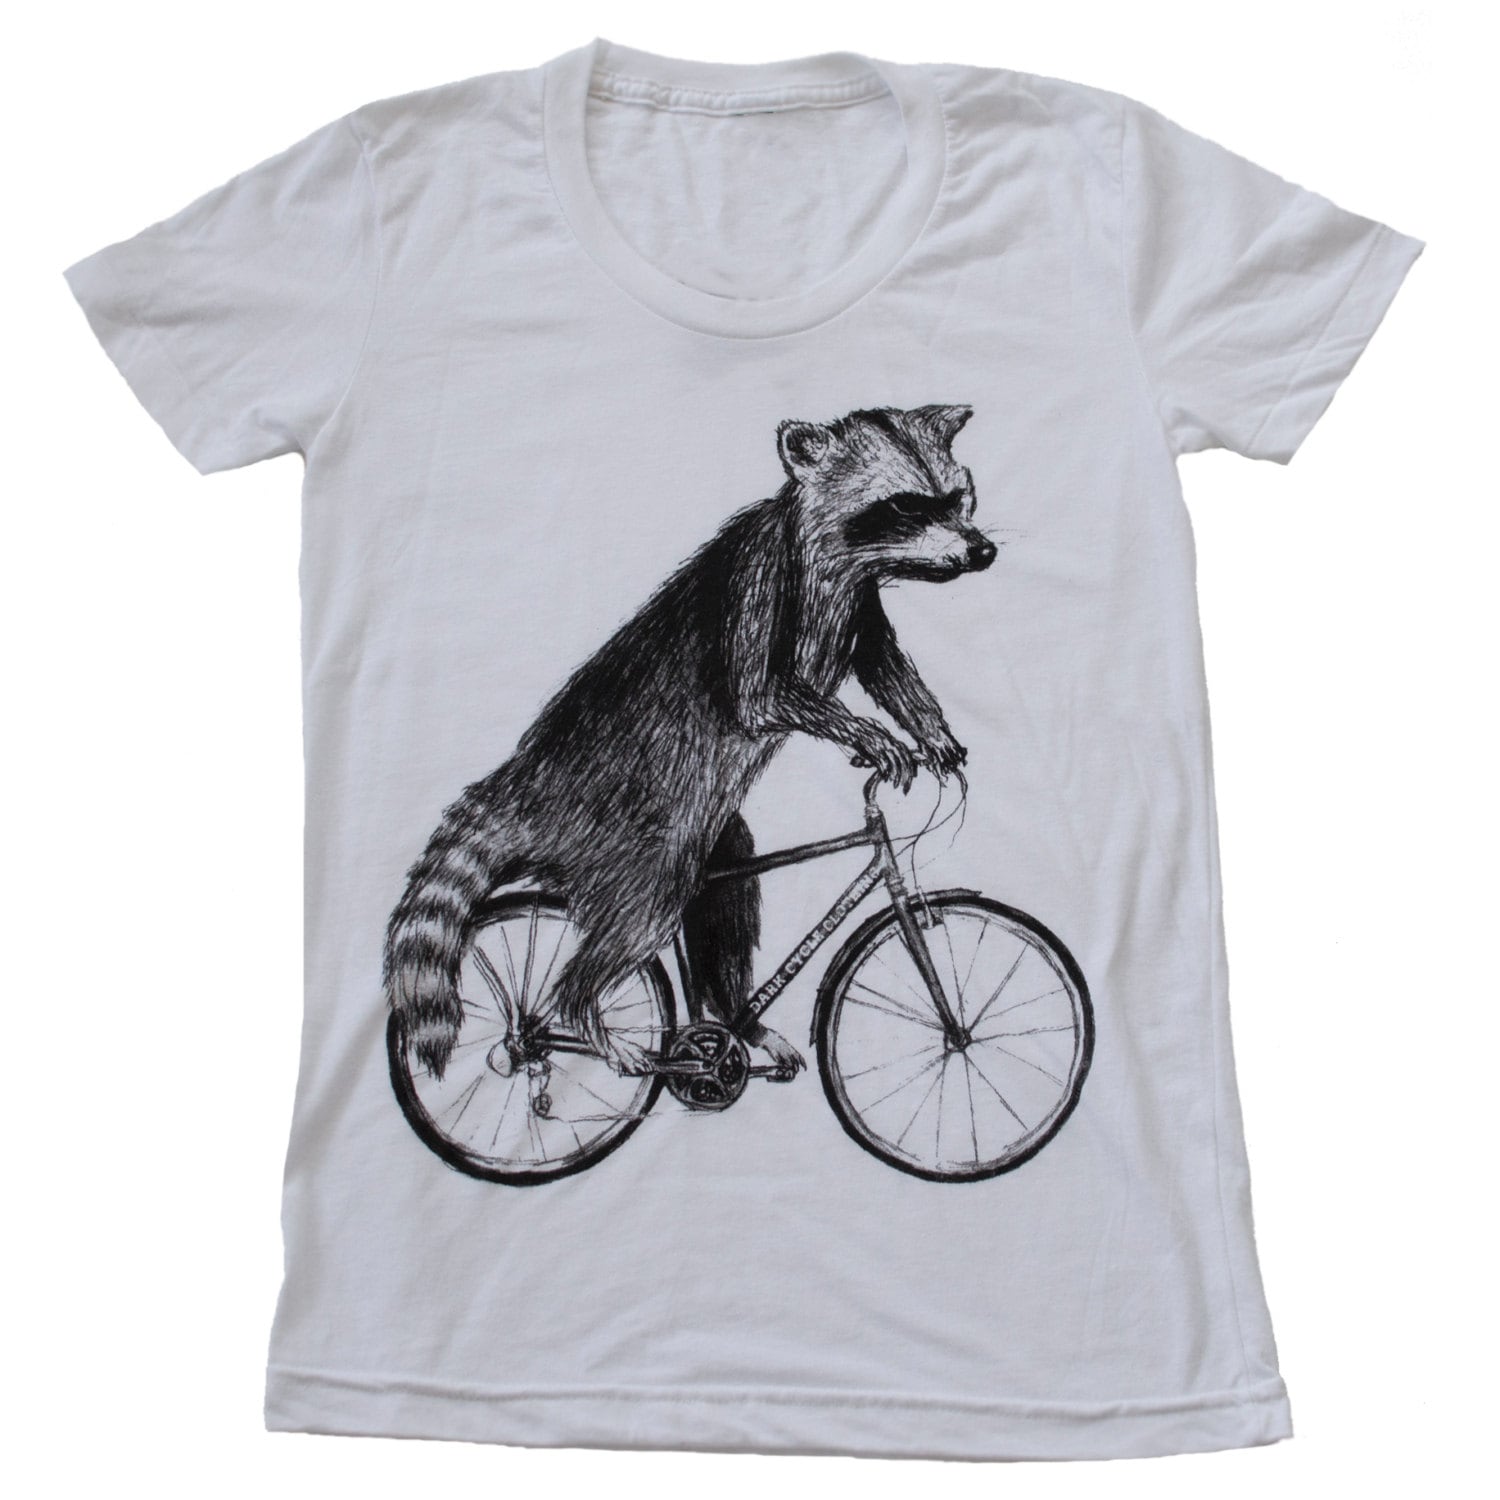 Raccoon Riding A Bicycle Screen Printed Shirt Womens | Etsy